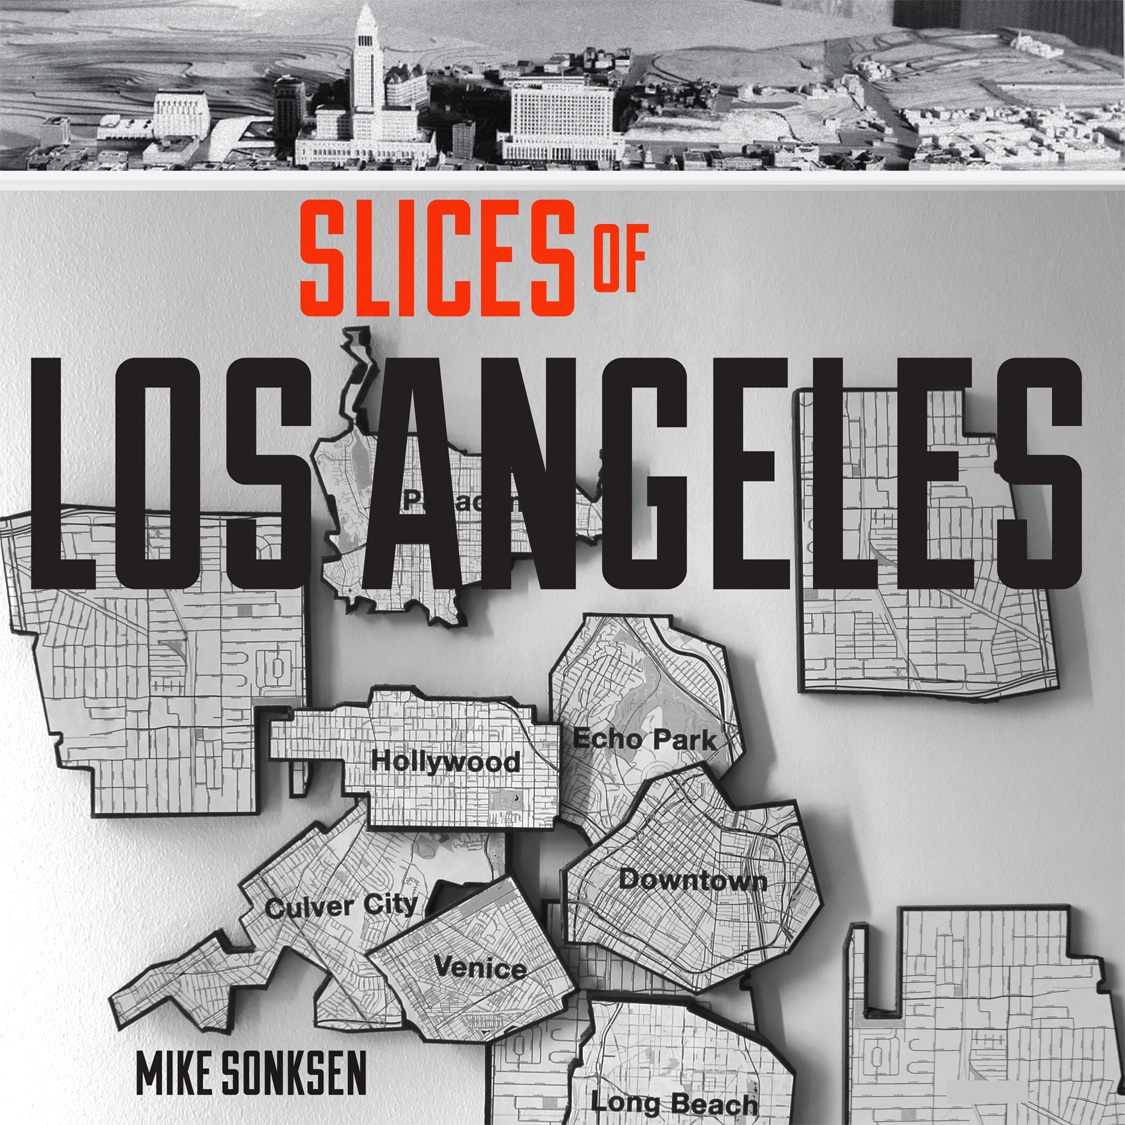 urban planning  history  LA history  california Los Angeles